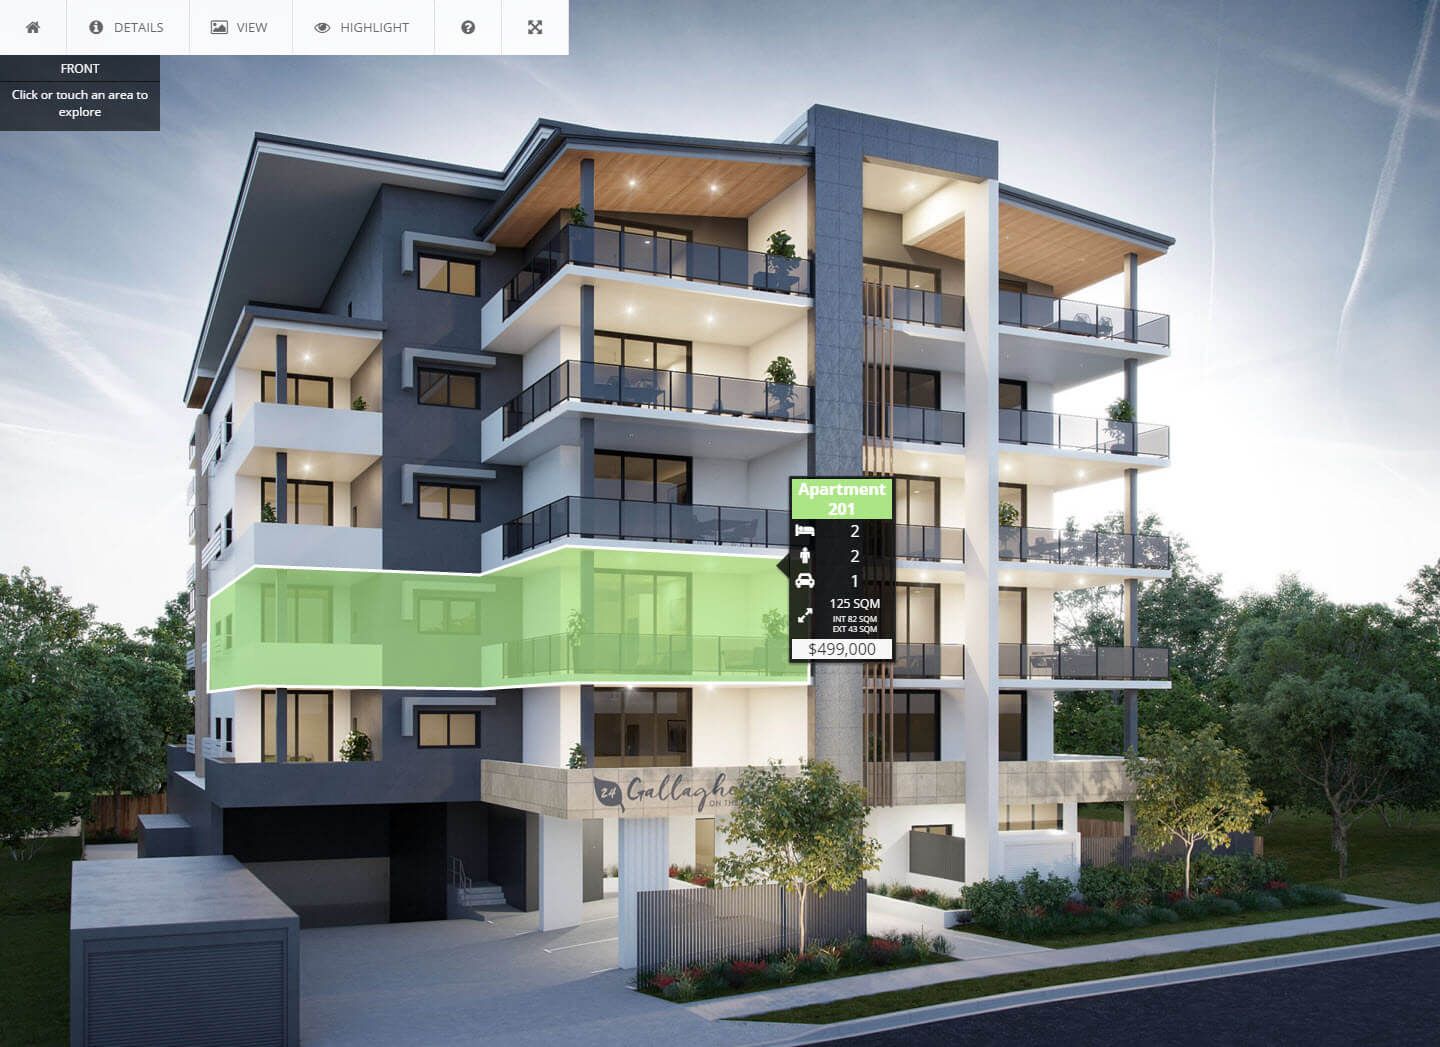 Off-the-plan apartment development interactive explorer by VizNavigator.com